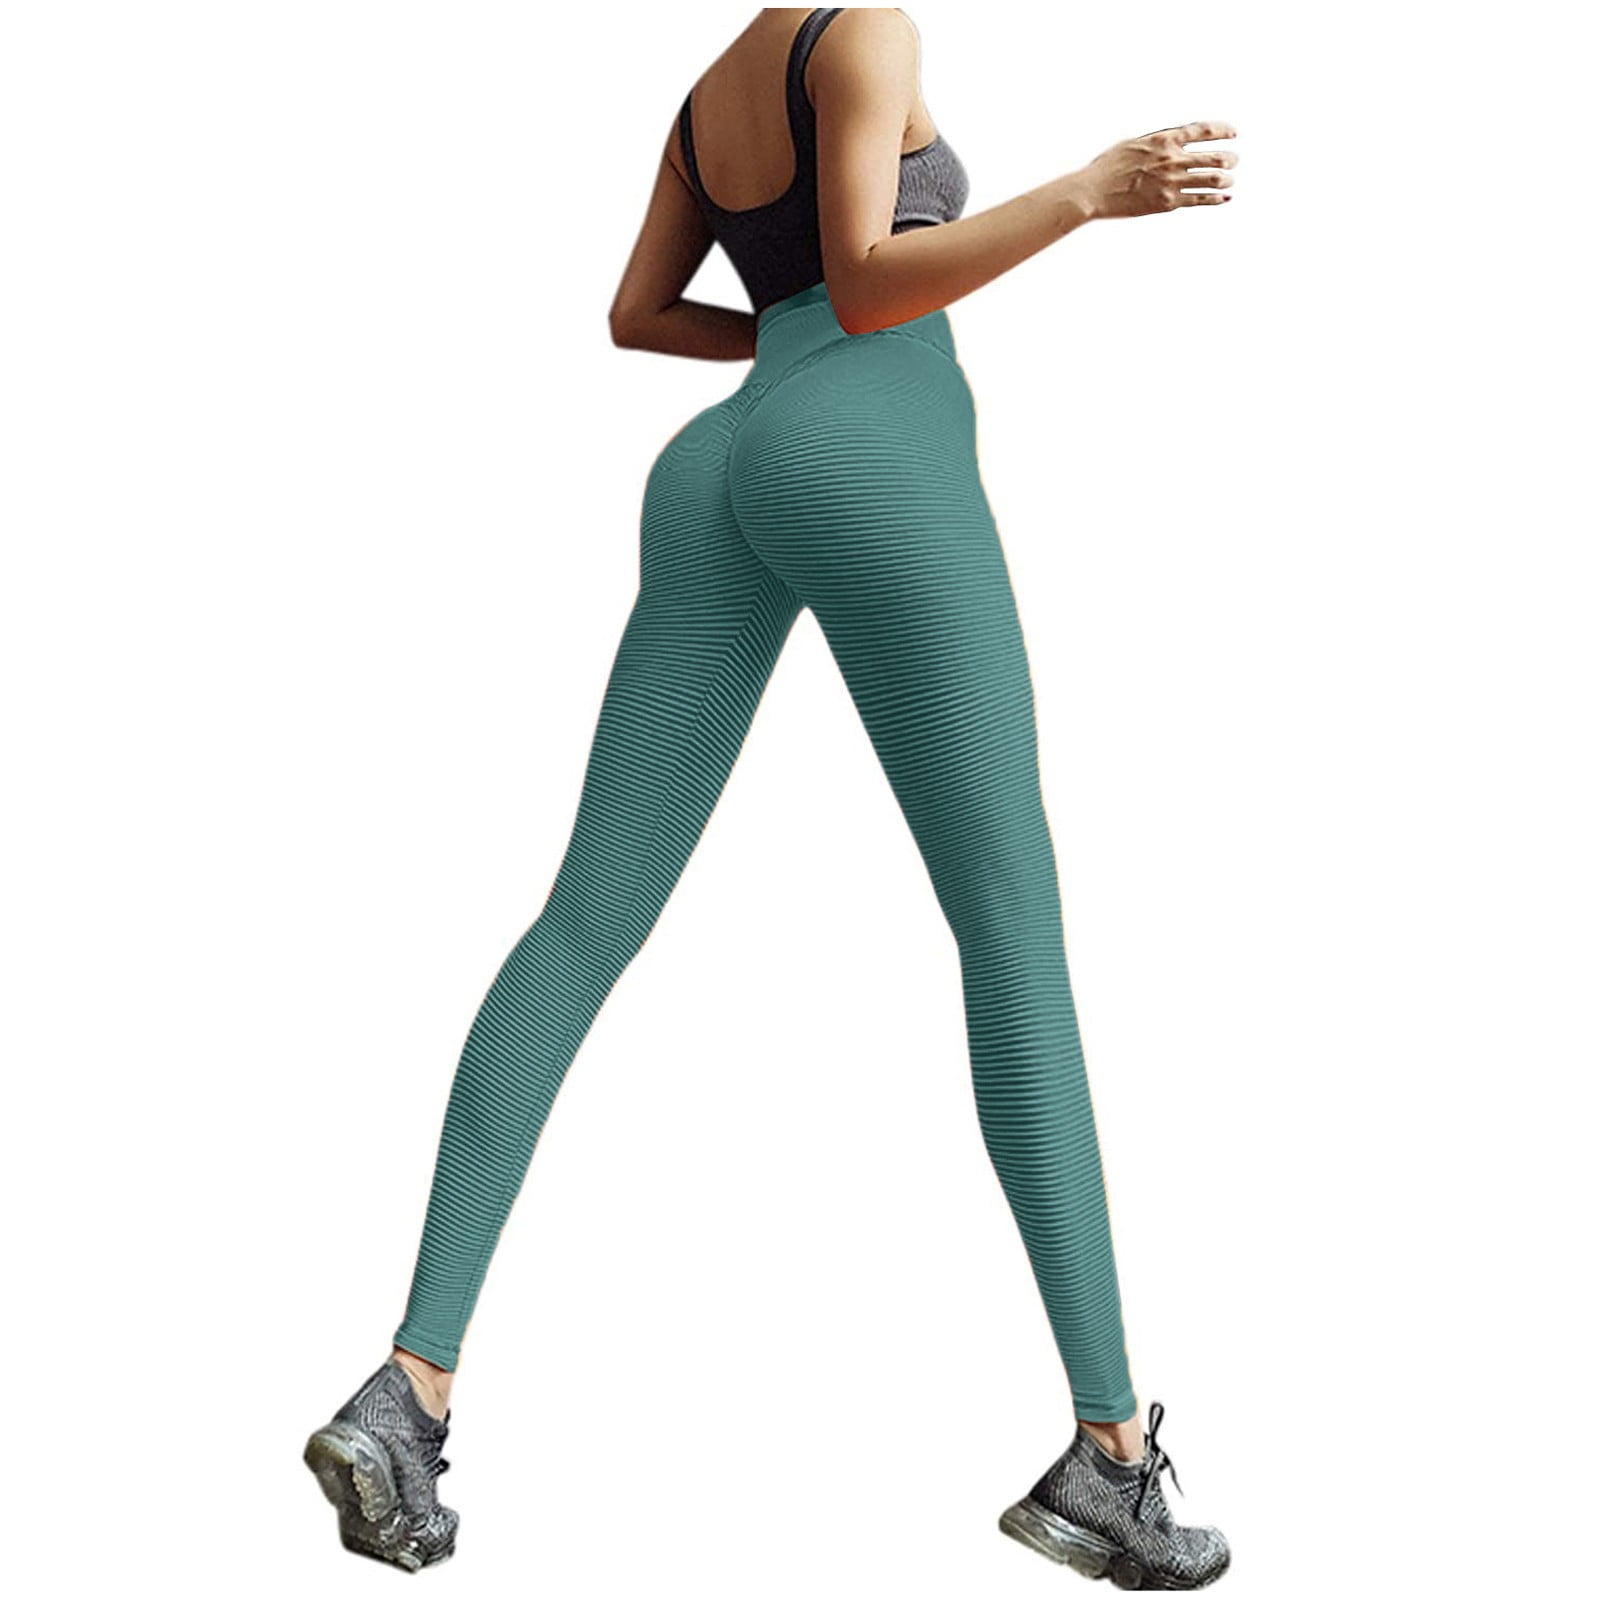 EQWLJWE High Waisted Leggings for Women- Soft Tummy Control Slimming Yoga  Pants for Workout Running Reg & Plus Size 